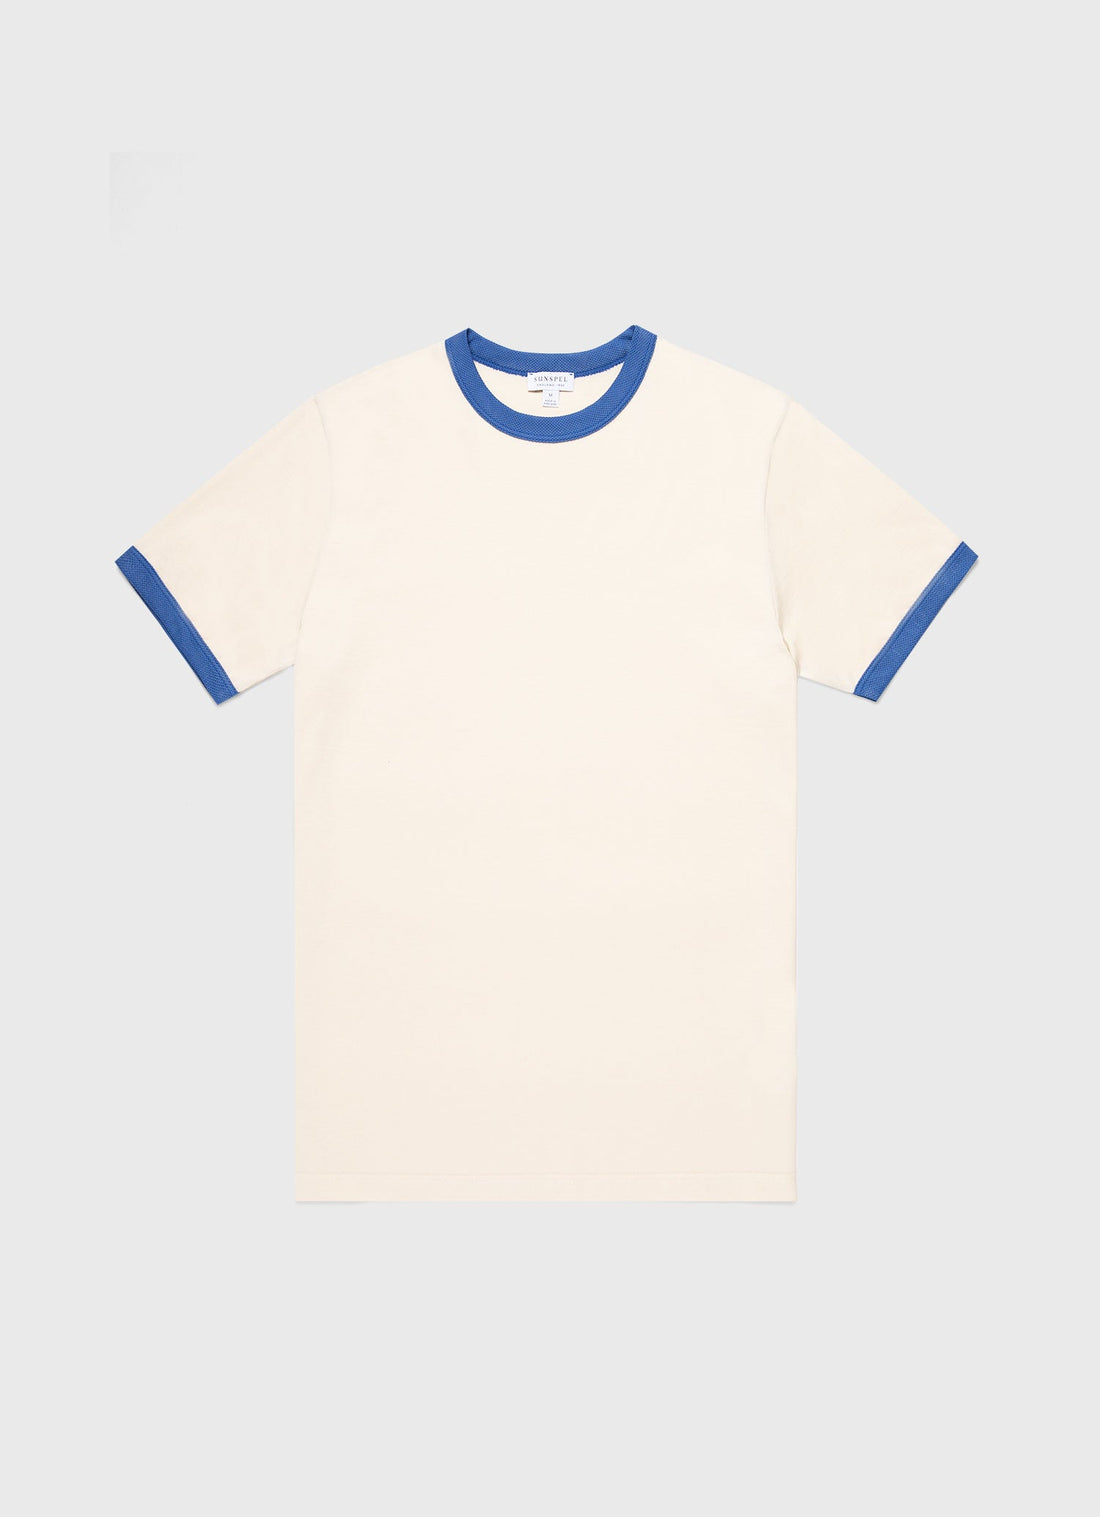 Men's Classic Ringer T-shirt in French Blue